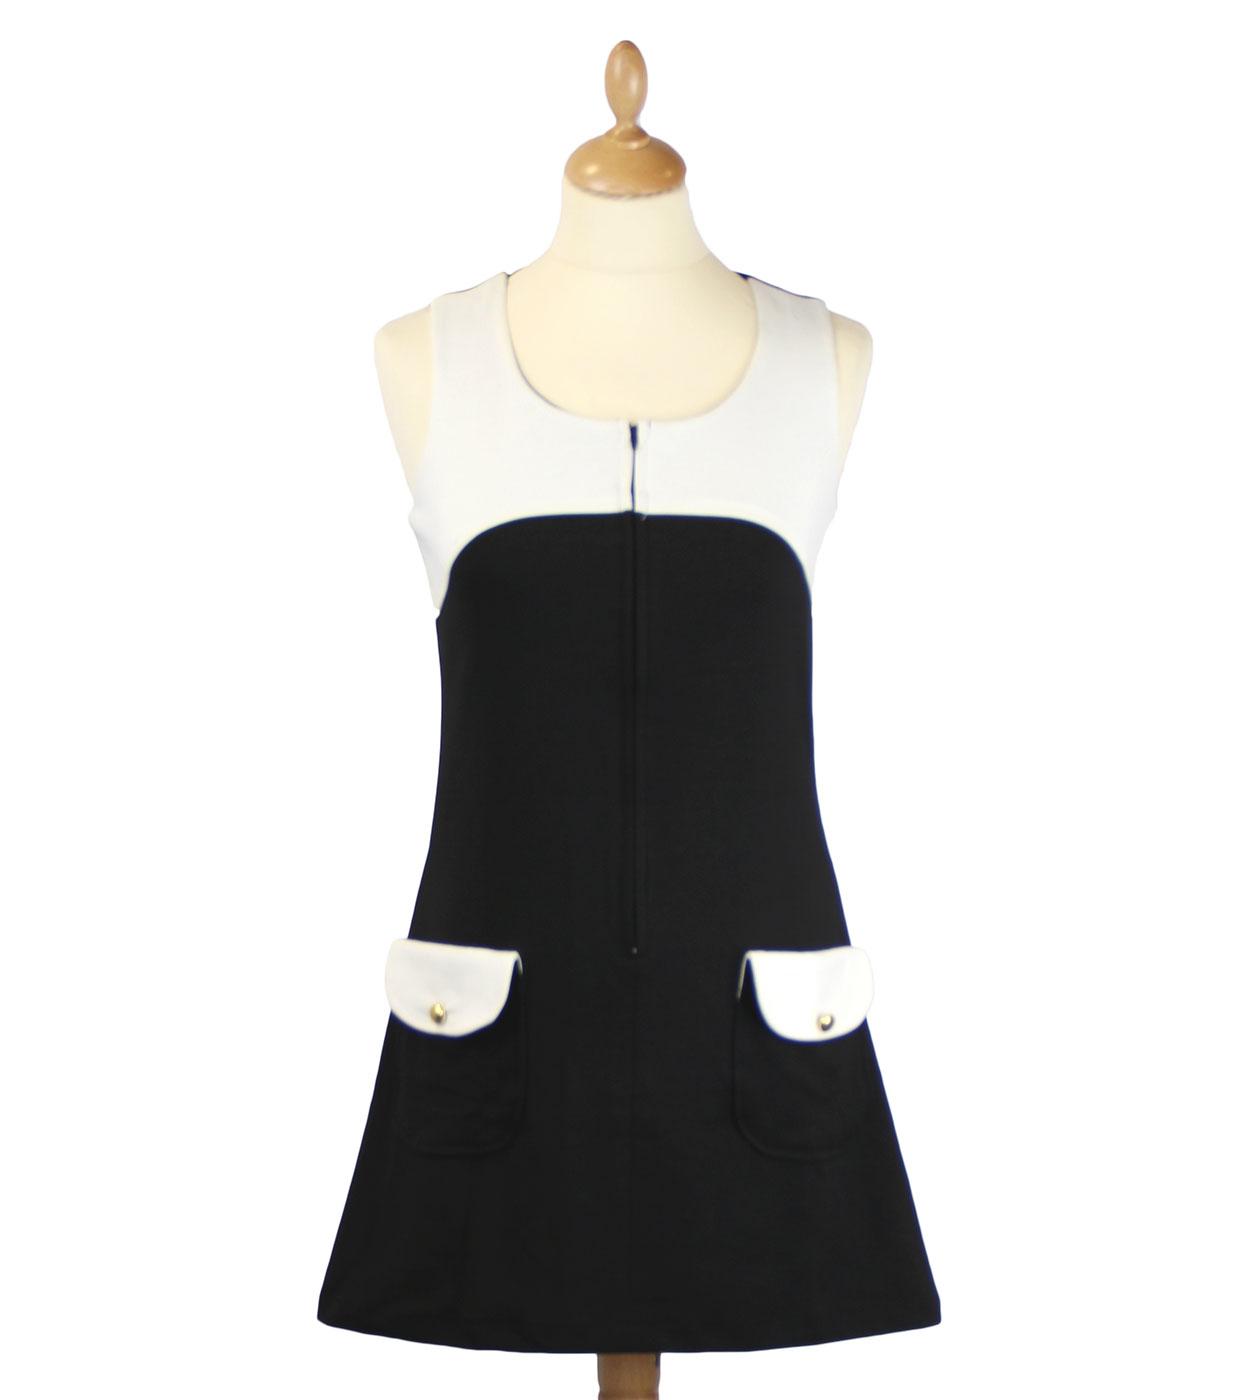 Edie Retro 1960s Mod Dress in Black/White Top